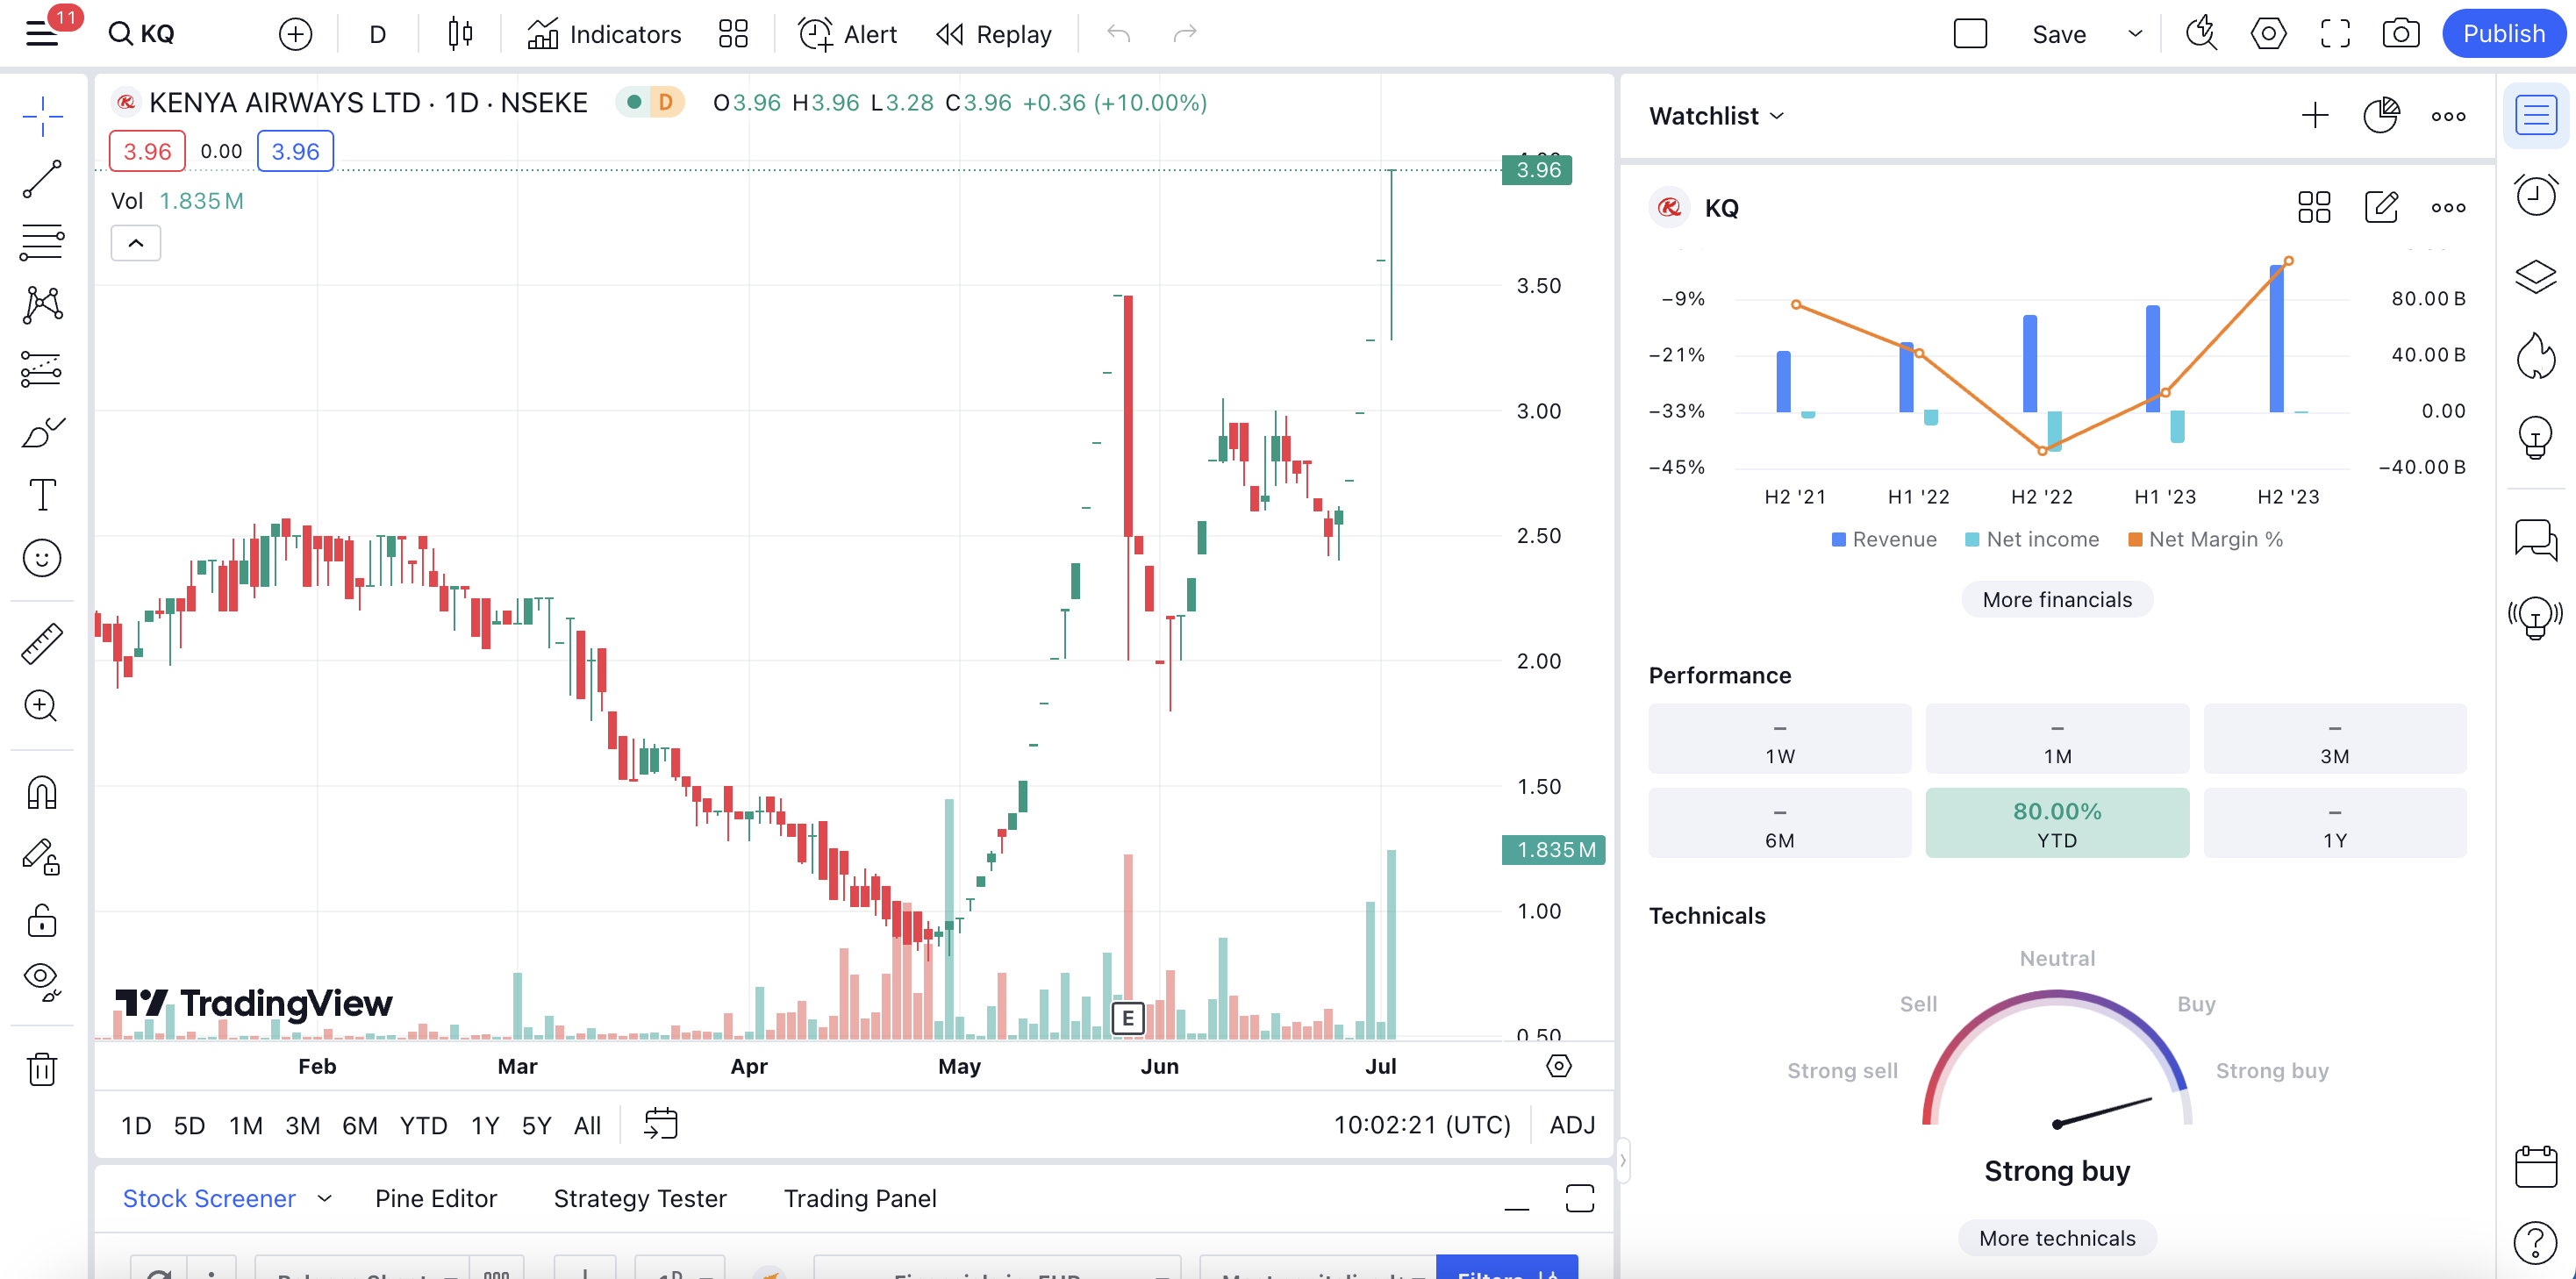 TradingView platform showing Kenya Airways chart with integrated stock data